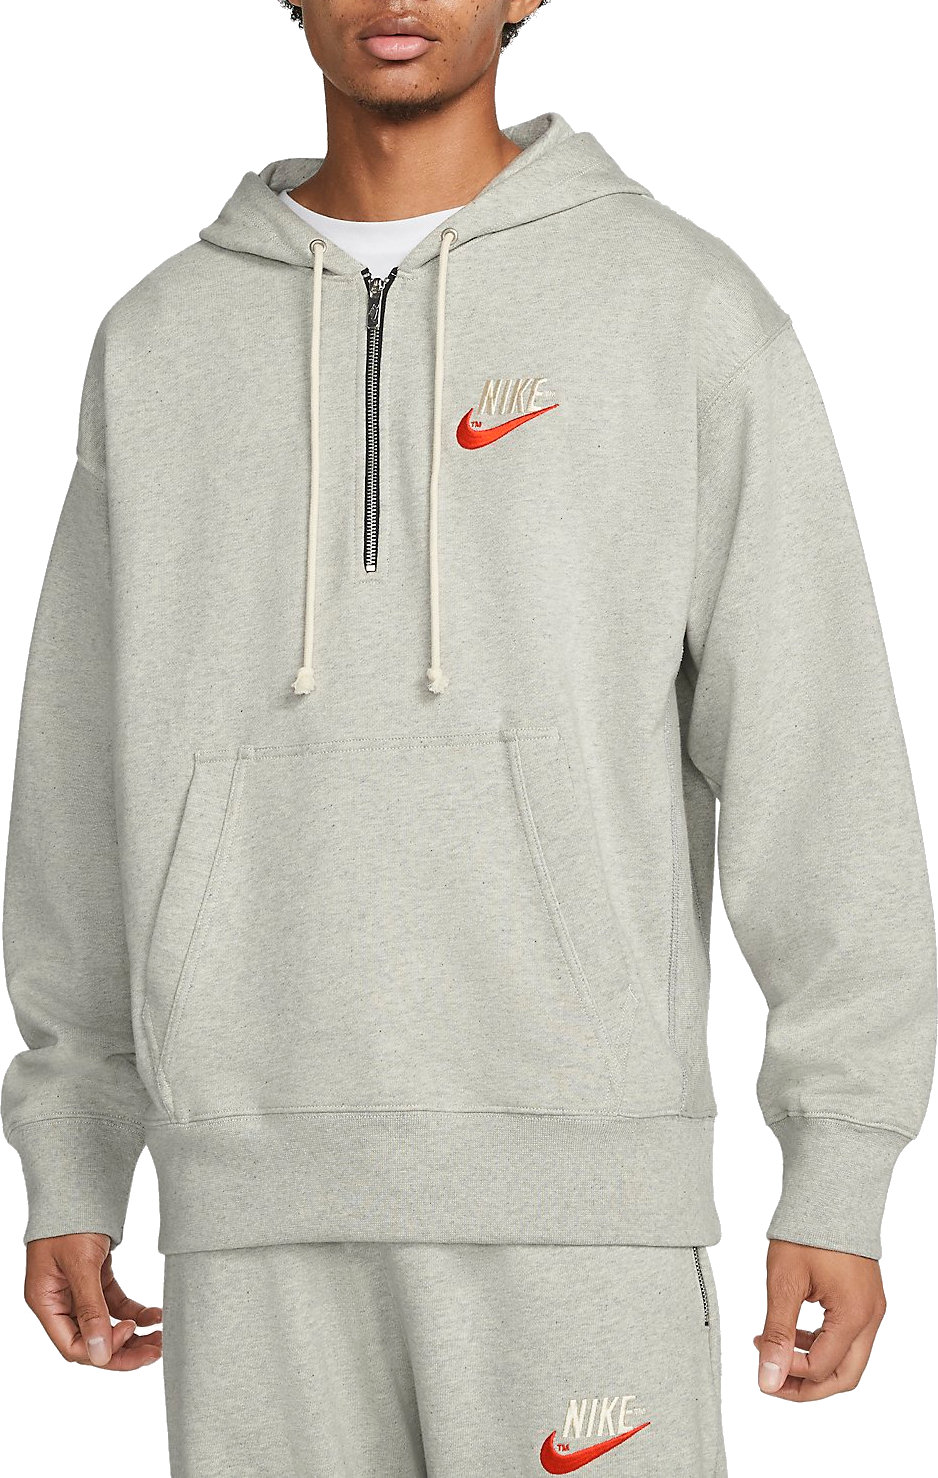 Hooded sweatshirt Nike Sportswear - Men's French Terry Pullover Hoodie